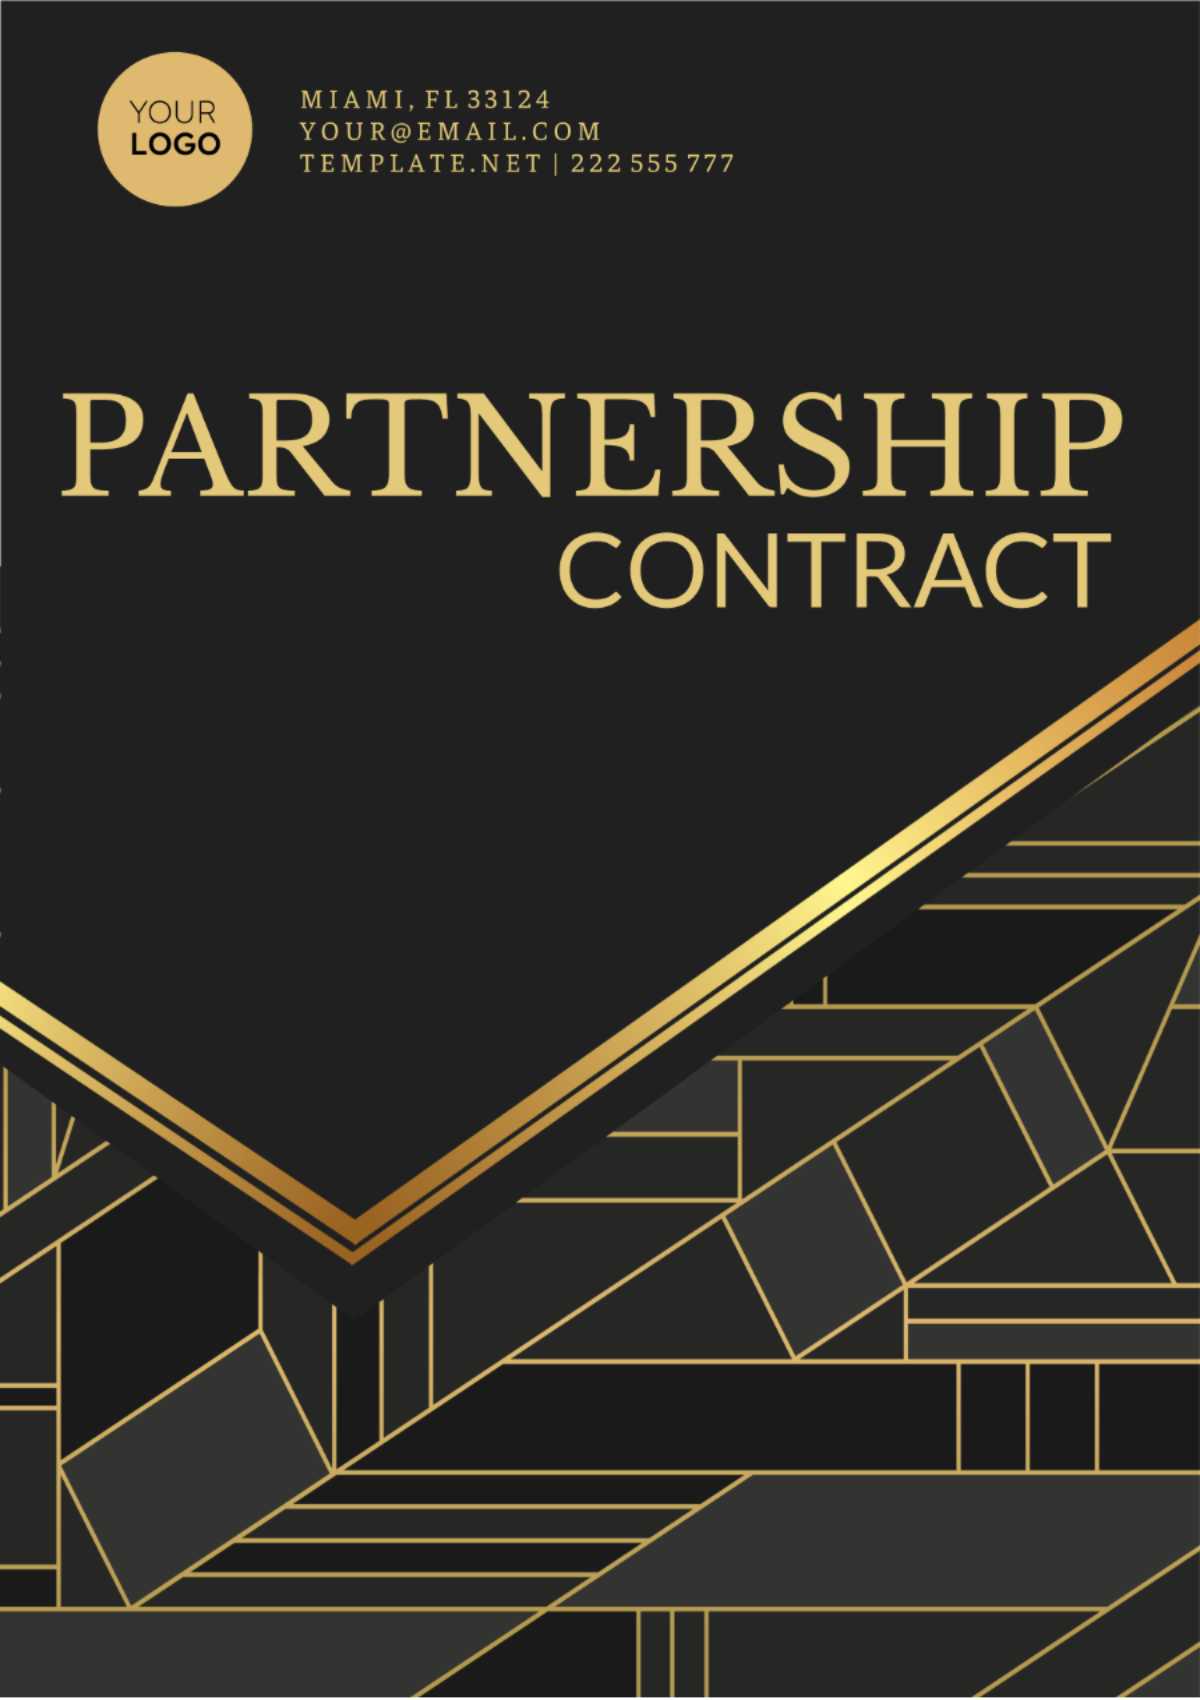 Partnership Contract Template